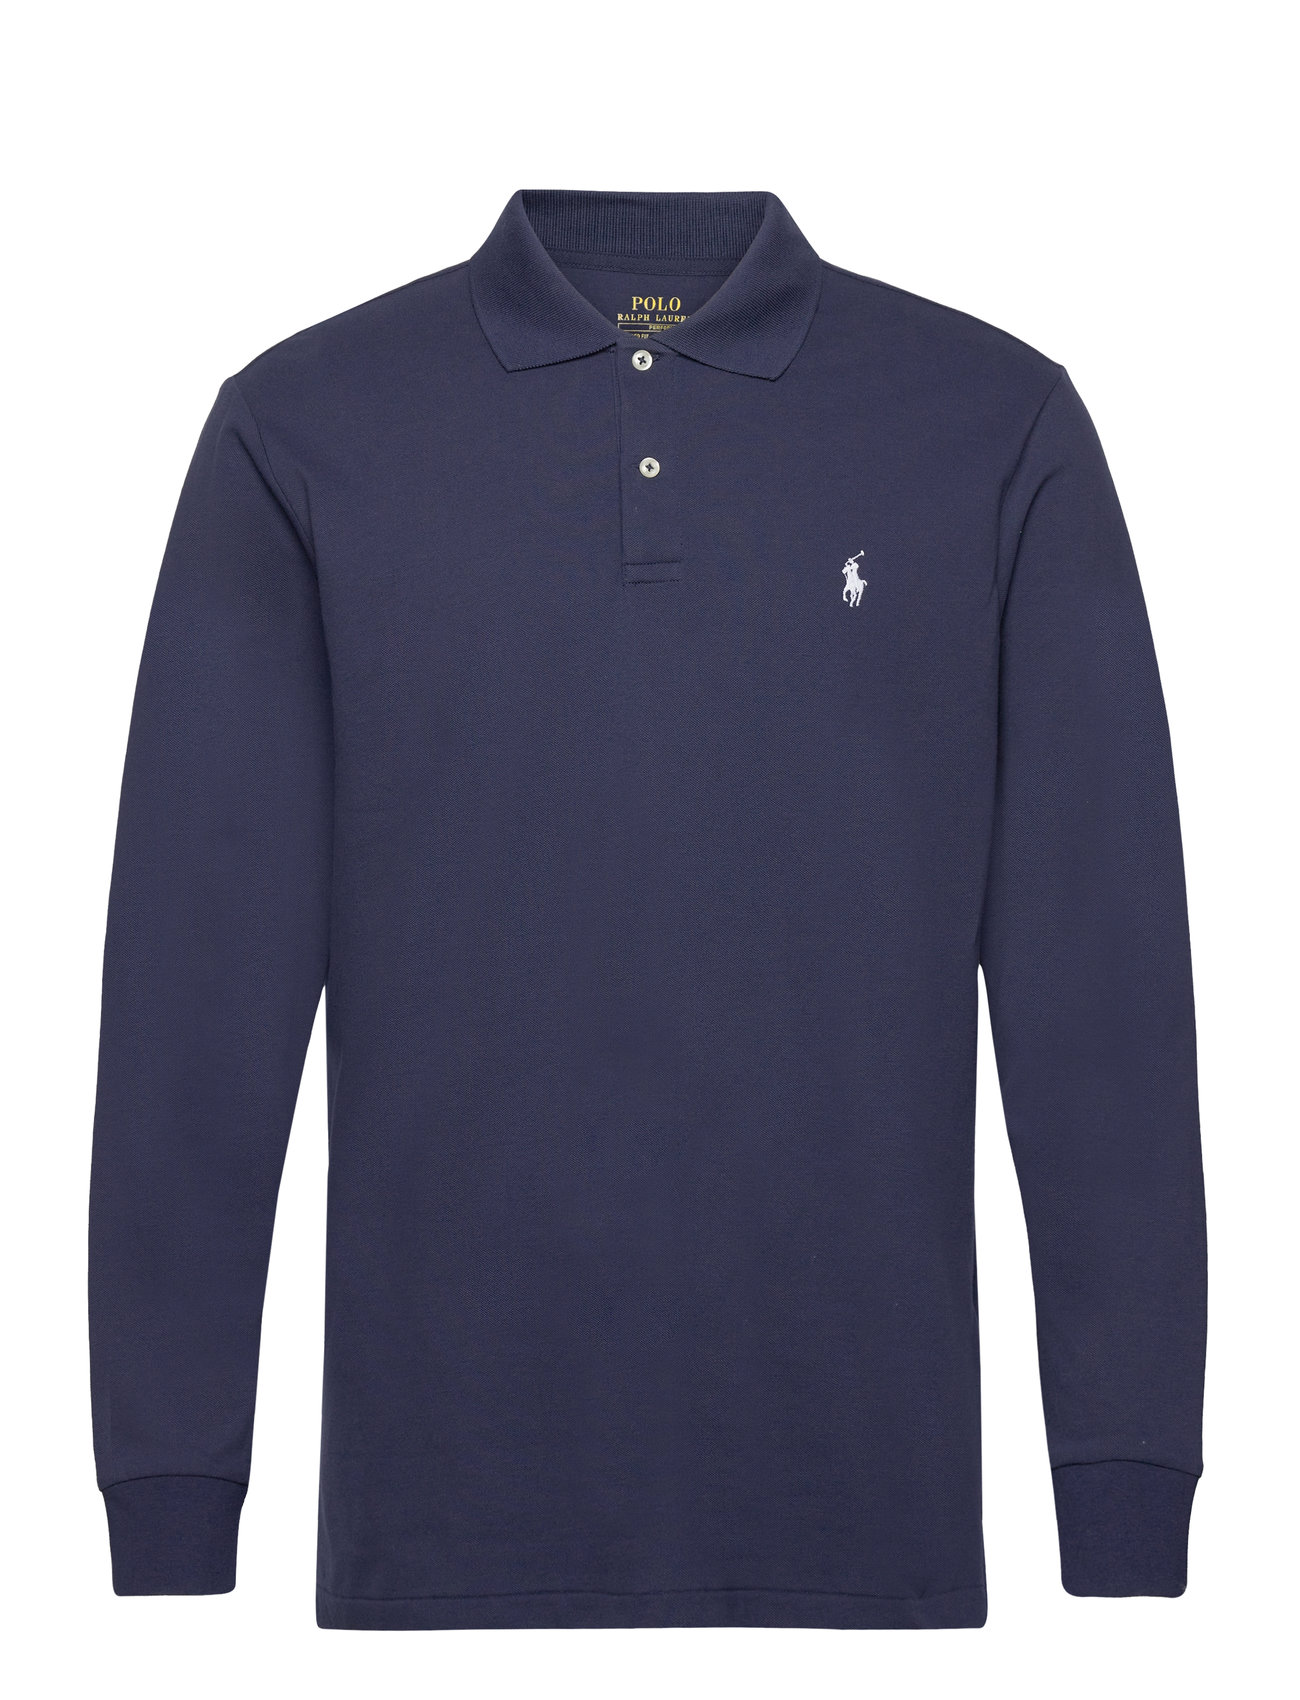 Tailored Fit Performance Polo Shirt Sport Polos Long-sleeved Navy Ralph Lauren Golf